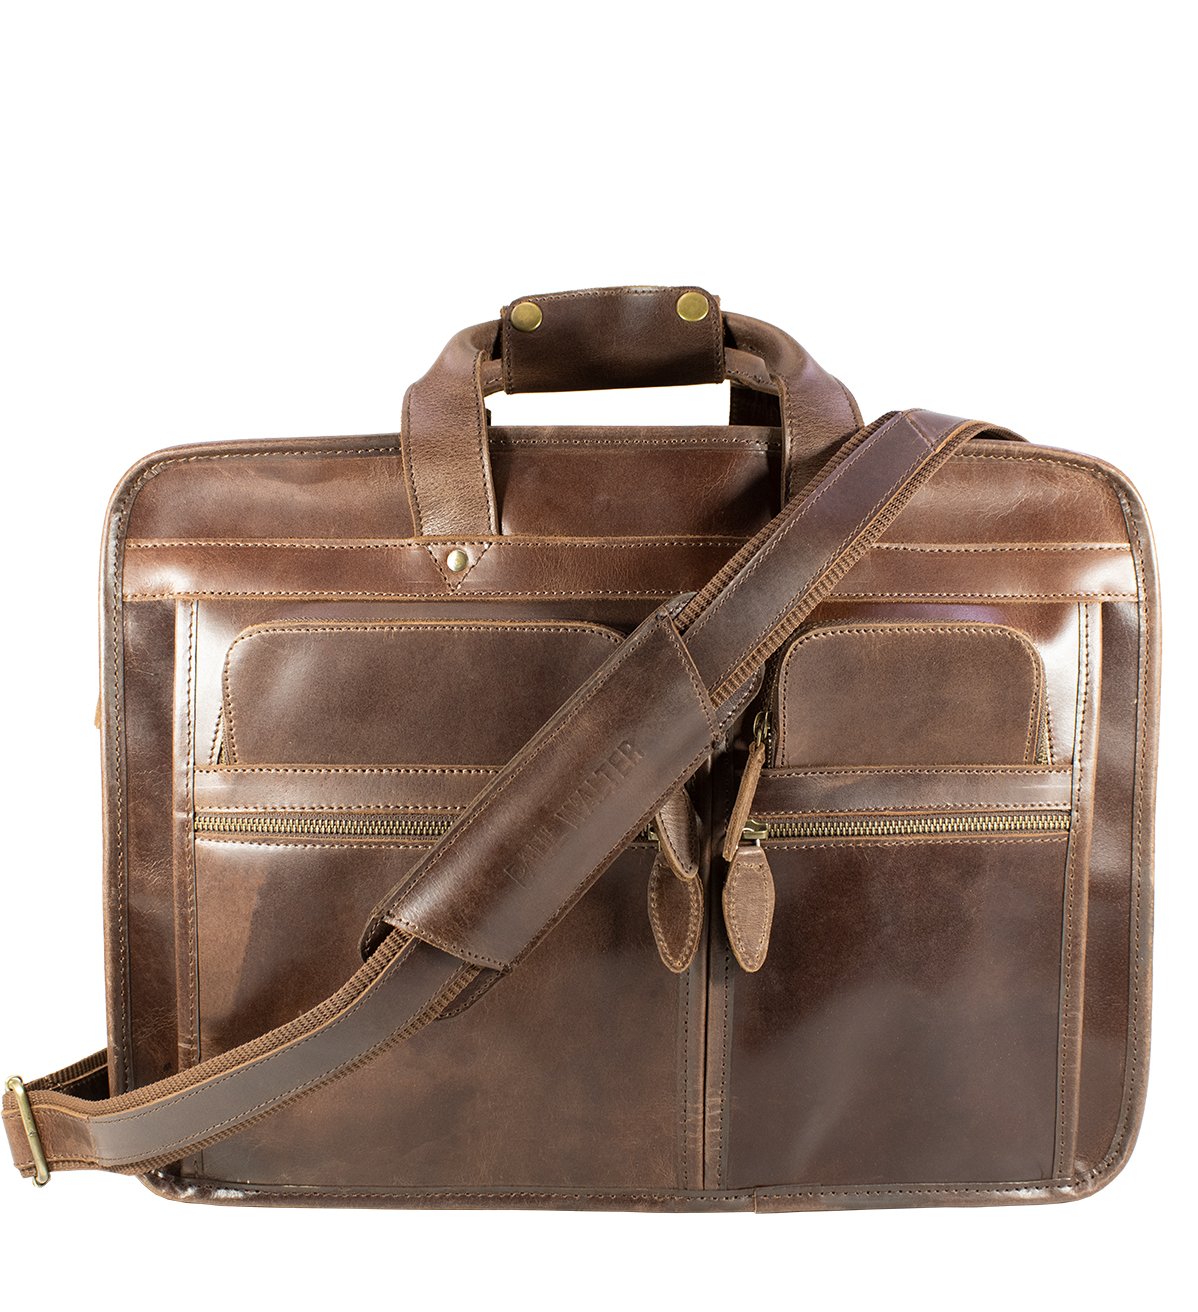 Briefcase Laptop Bag - #BCB-01 BR